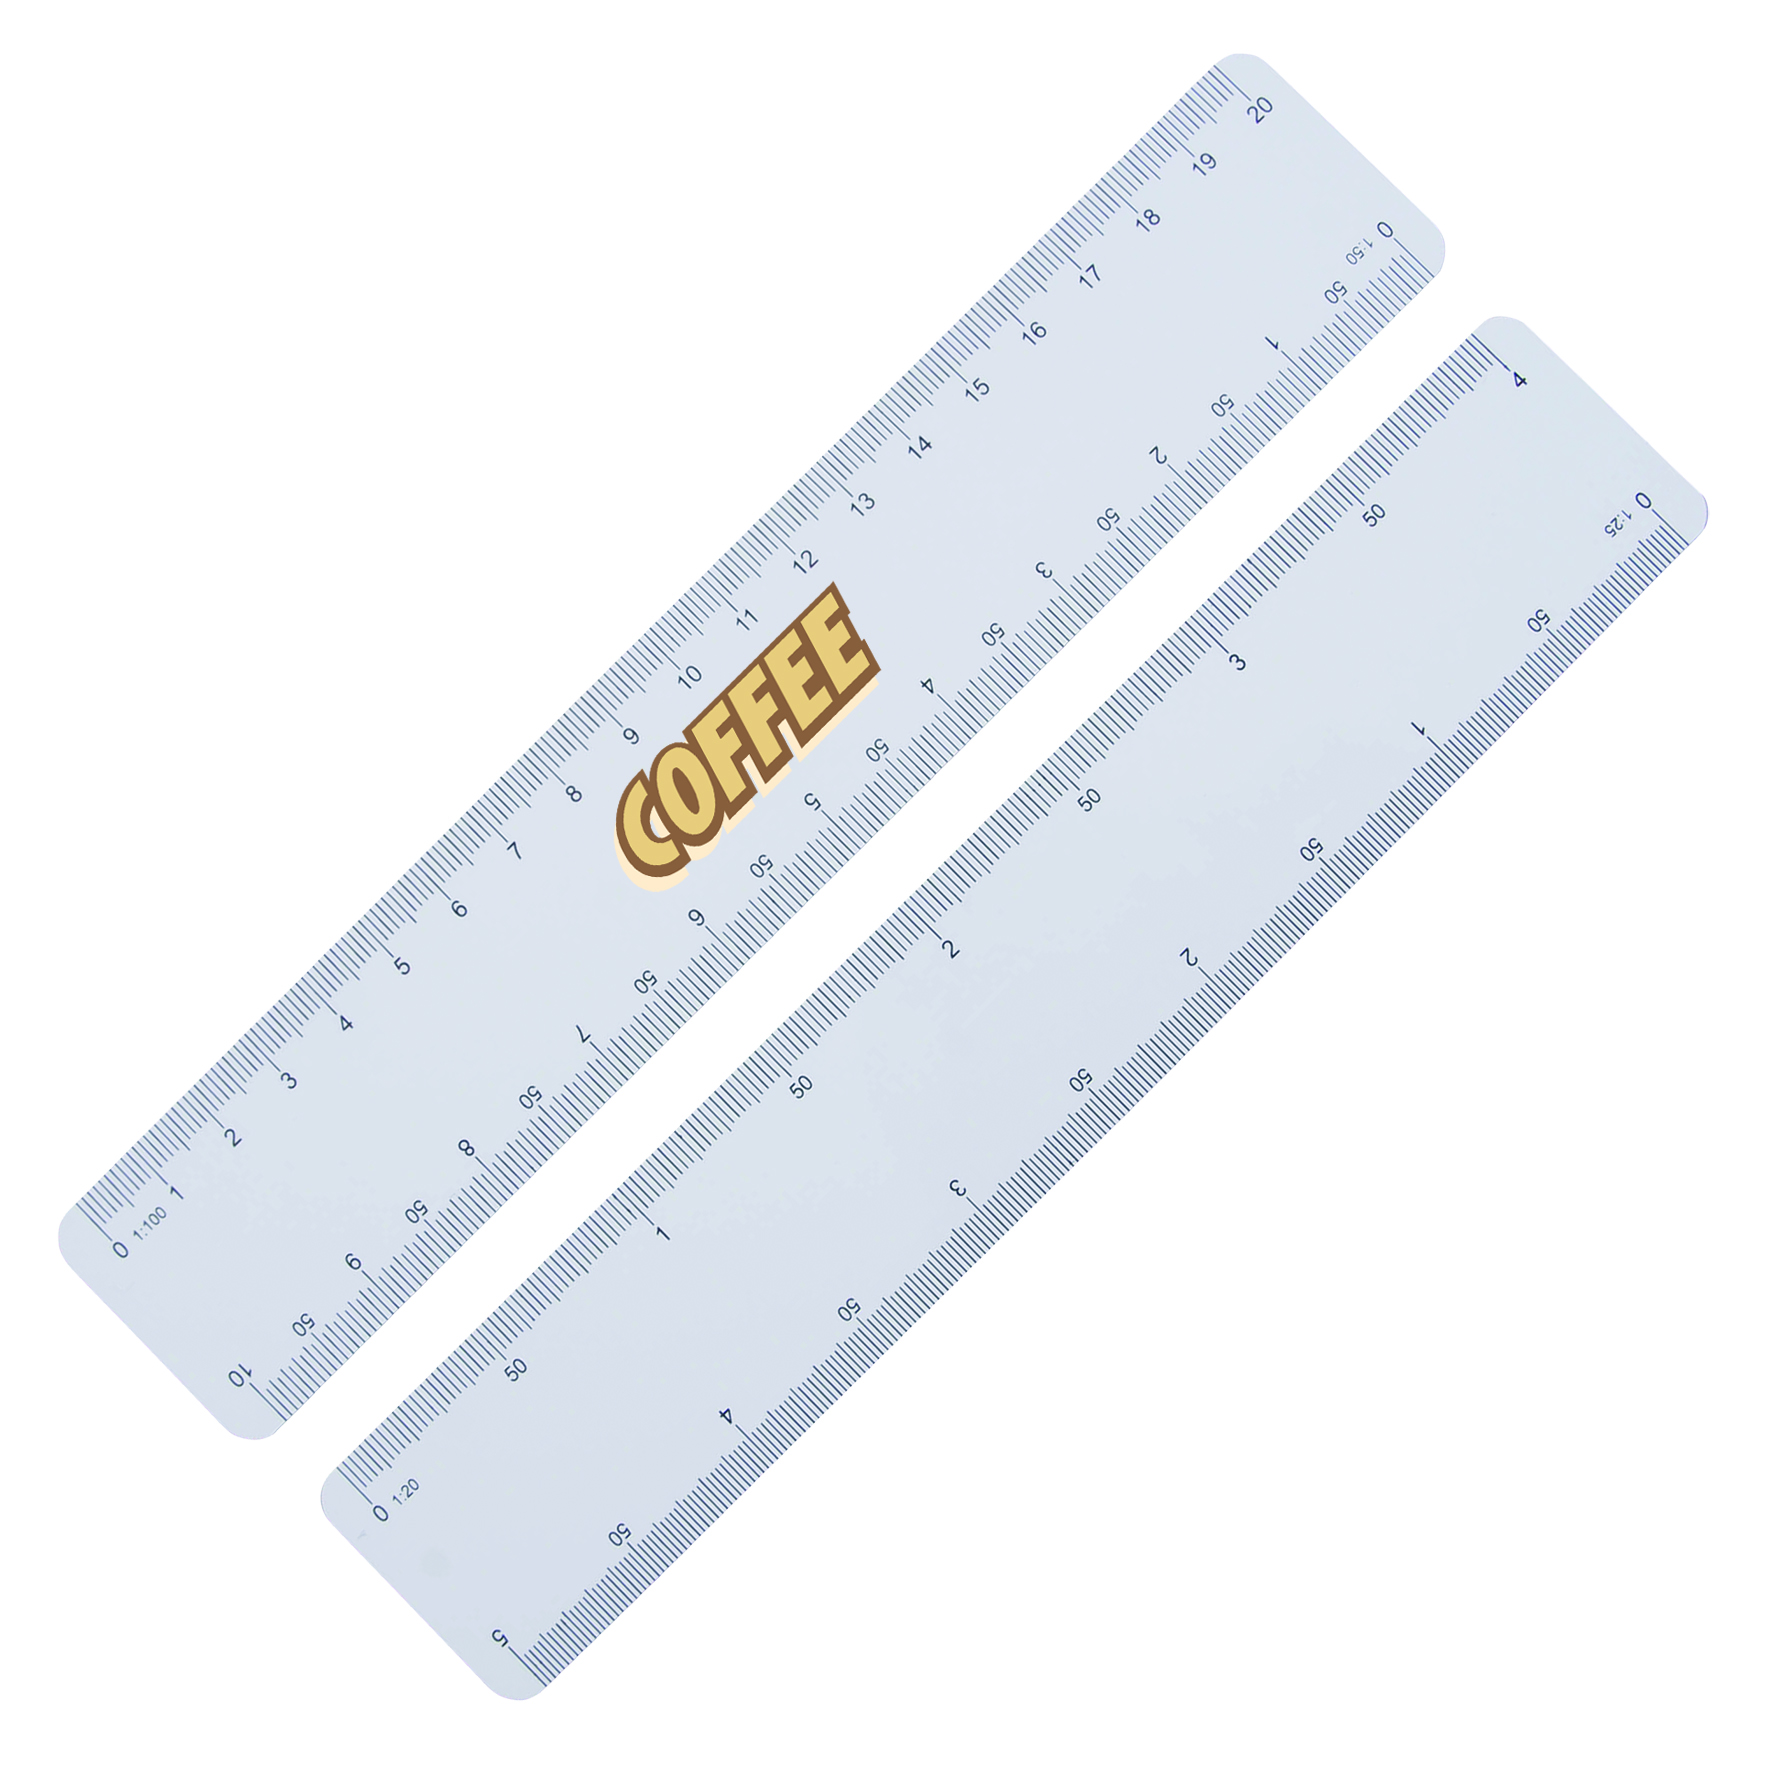 x817524 02 - Ultra thin scale ruler (20cm)